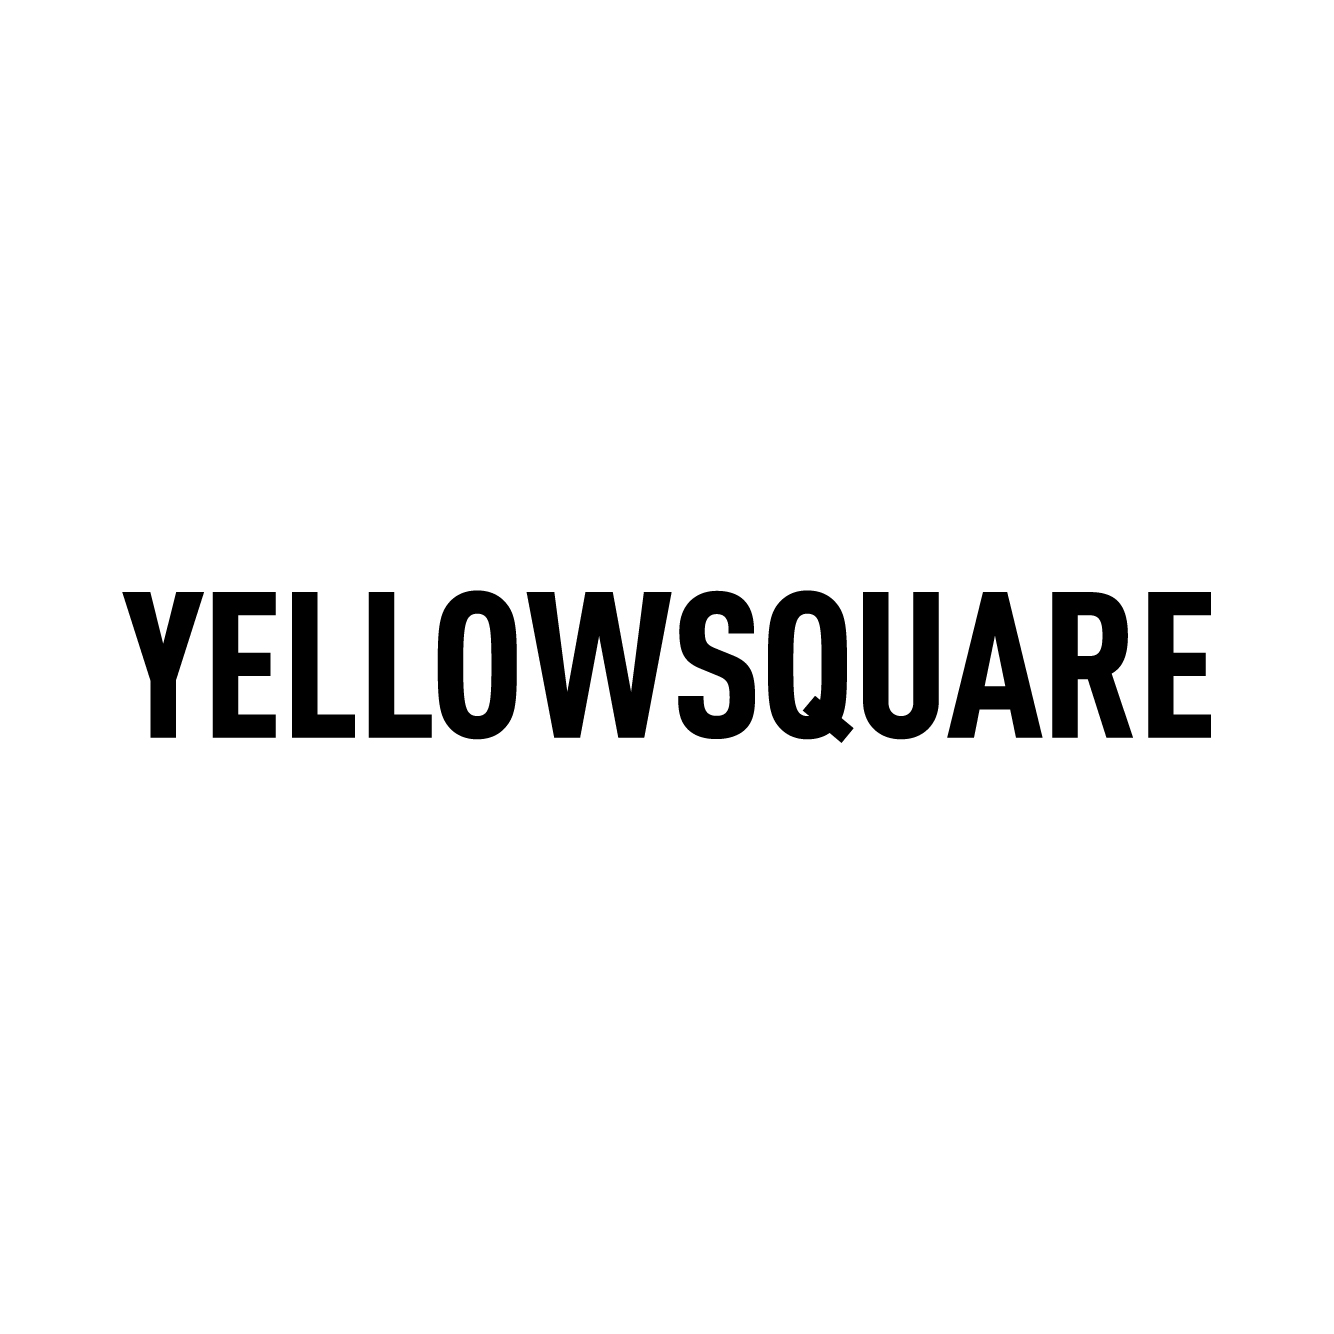 Yellowsquare